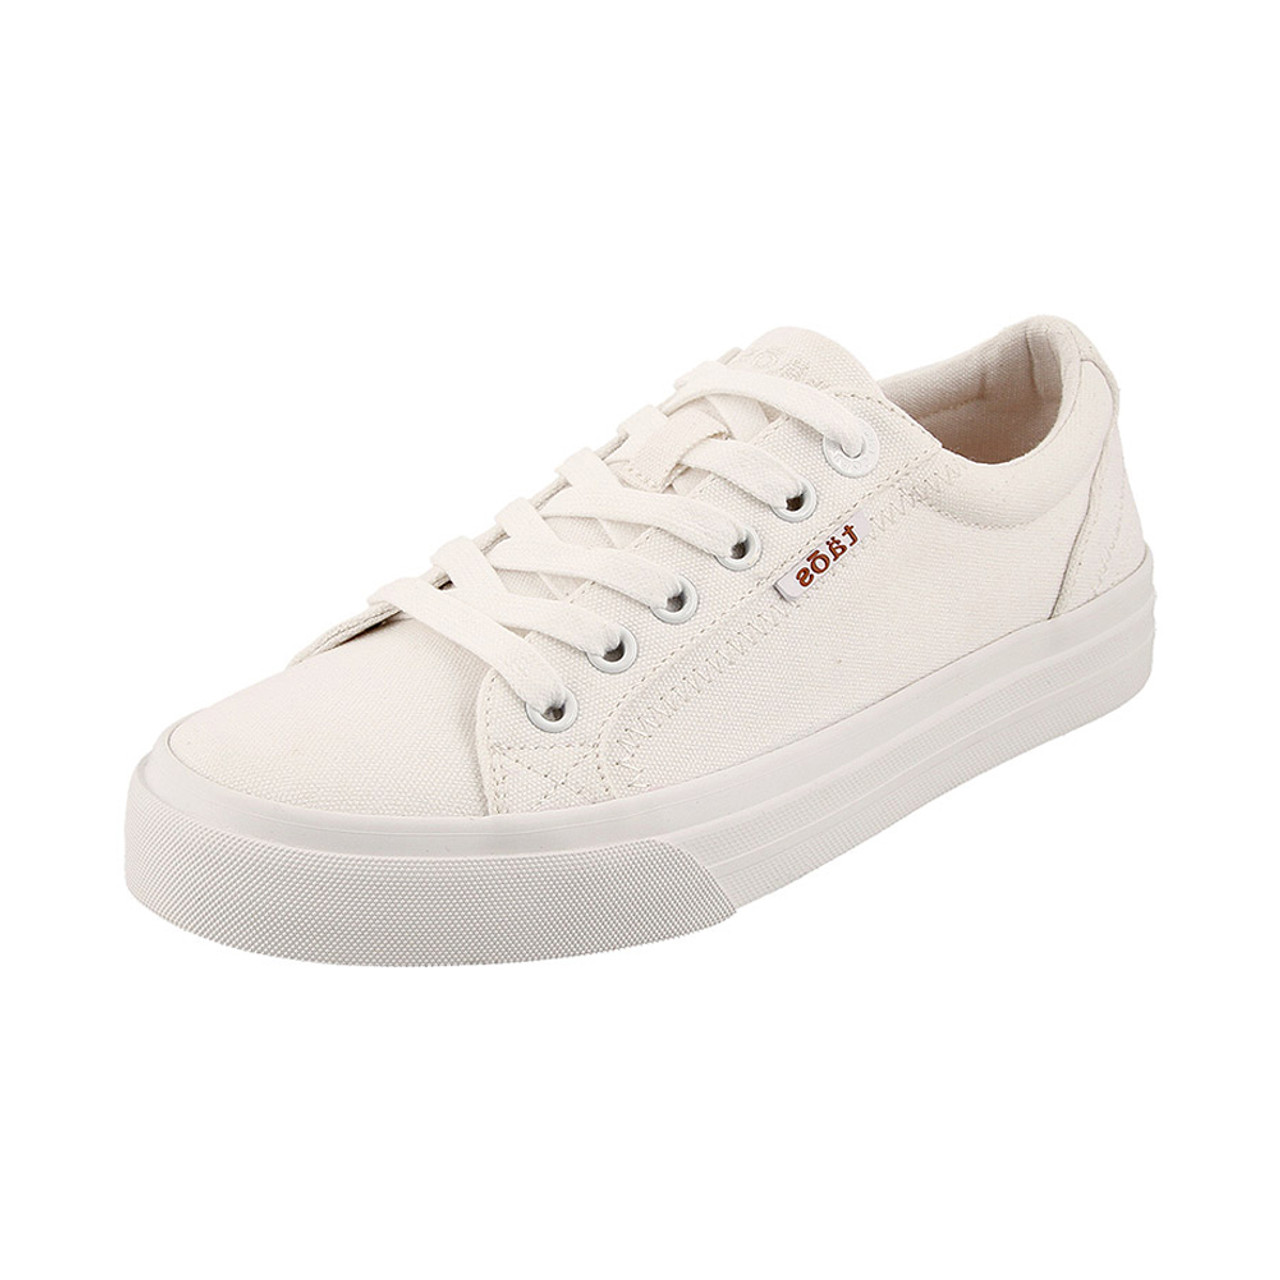 taos white sneakers